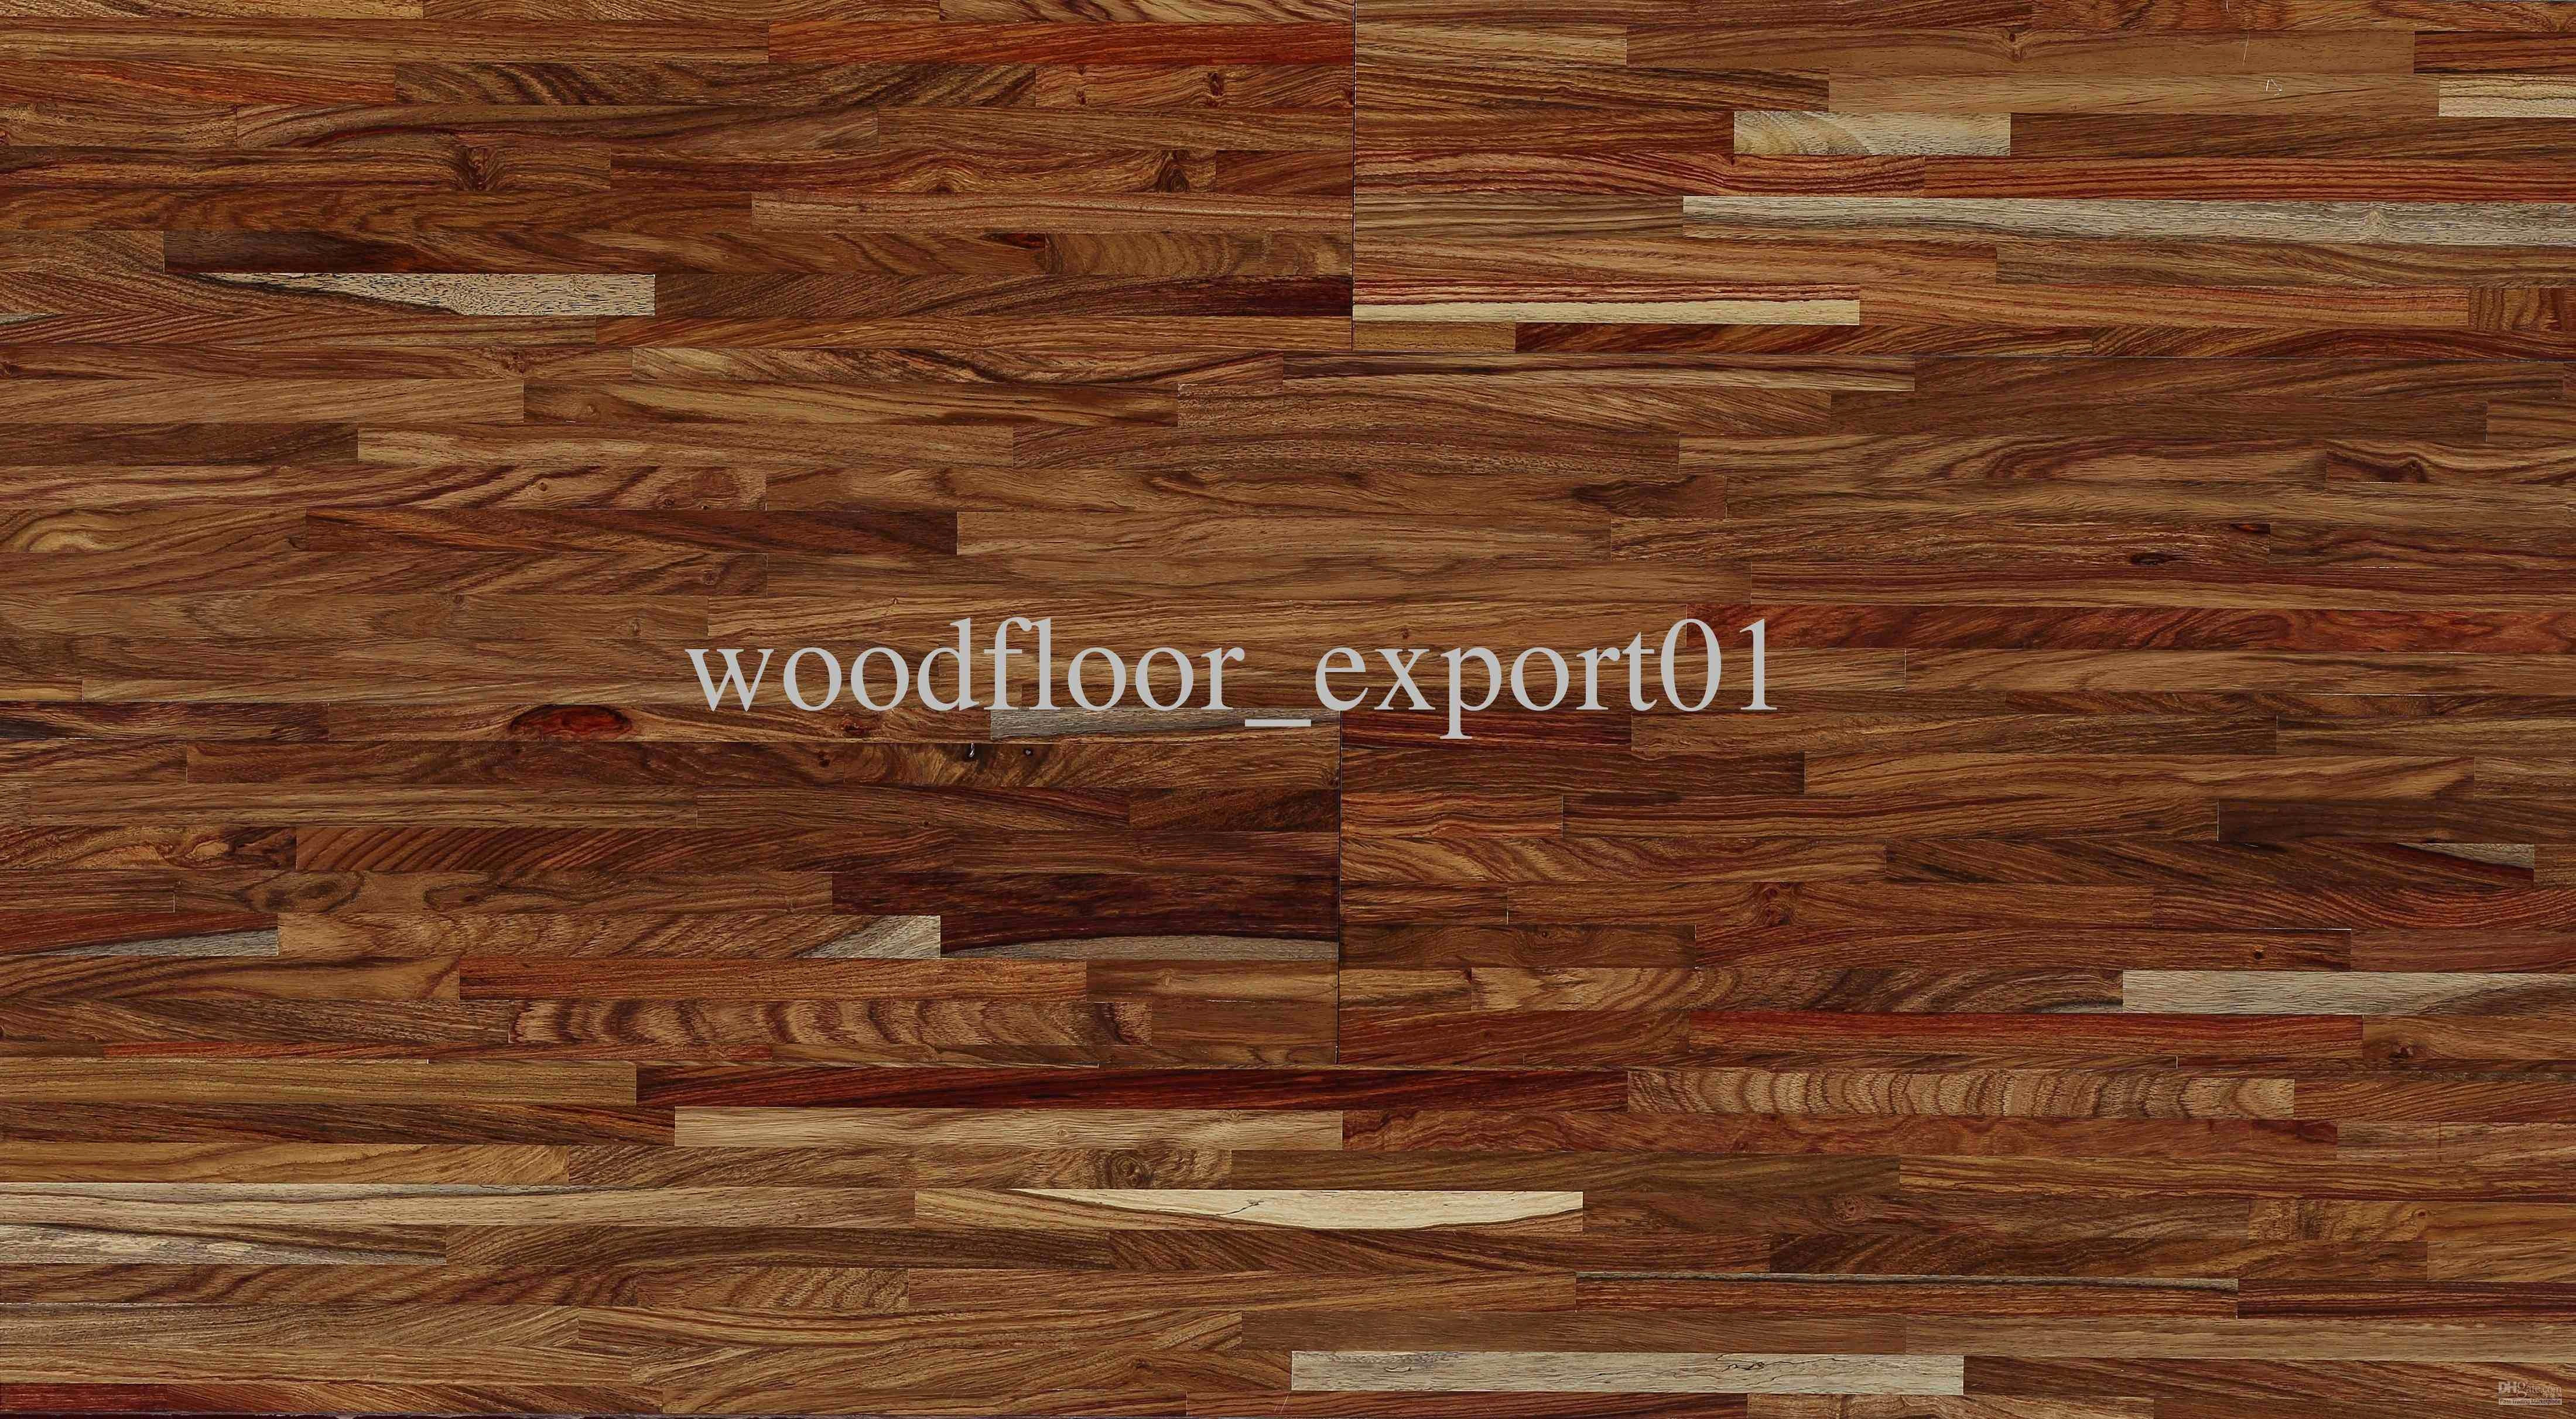 Hardwood Flooring Dark Brown Of 15 Unique Types Of Hardwood Flooring Image Dizpos Com Intended for Types Of Hardwood Flooring Awesome 50 Inspirational Sanding and Refinishing Hardwood Floors Graphics Image Of 15